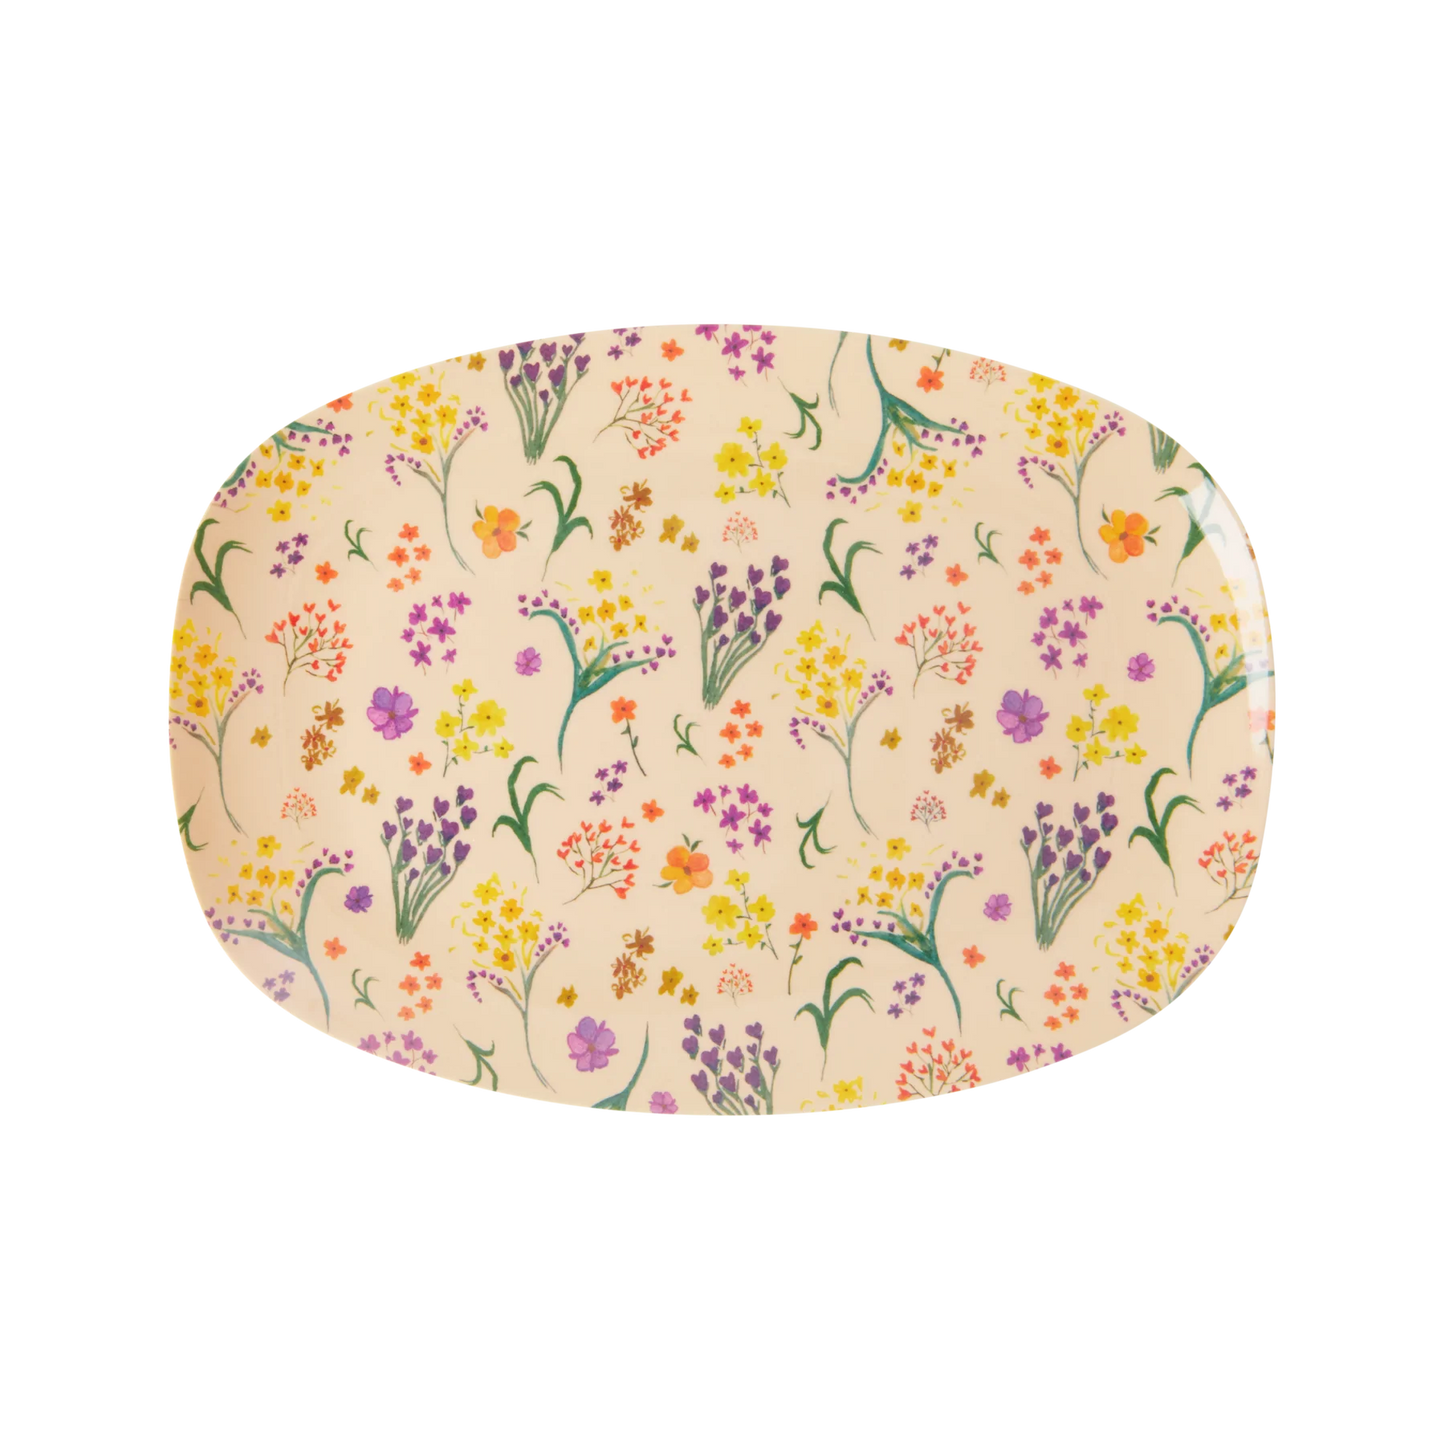 Rechthoekig bord met wild flowers print | RICE